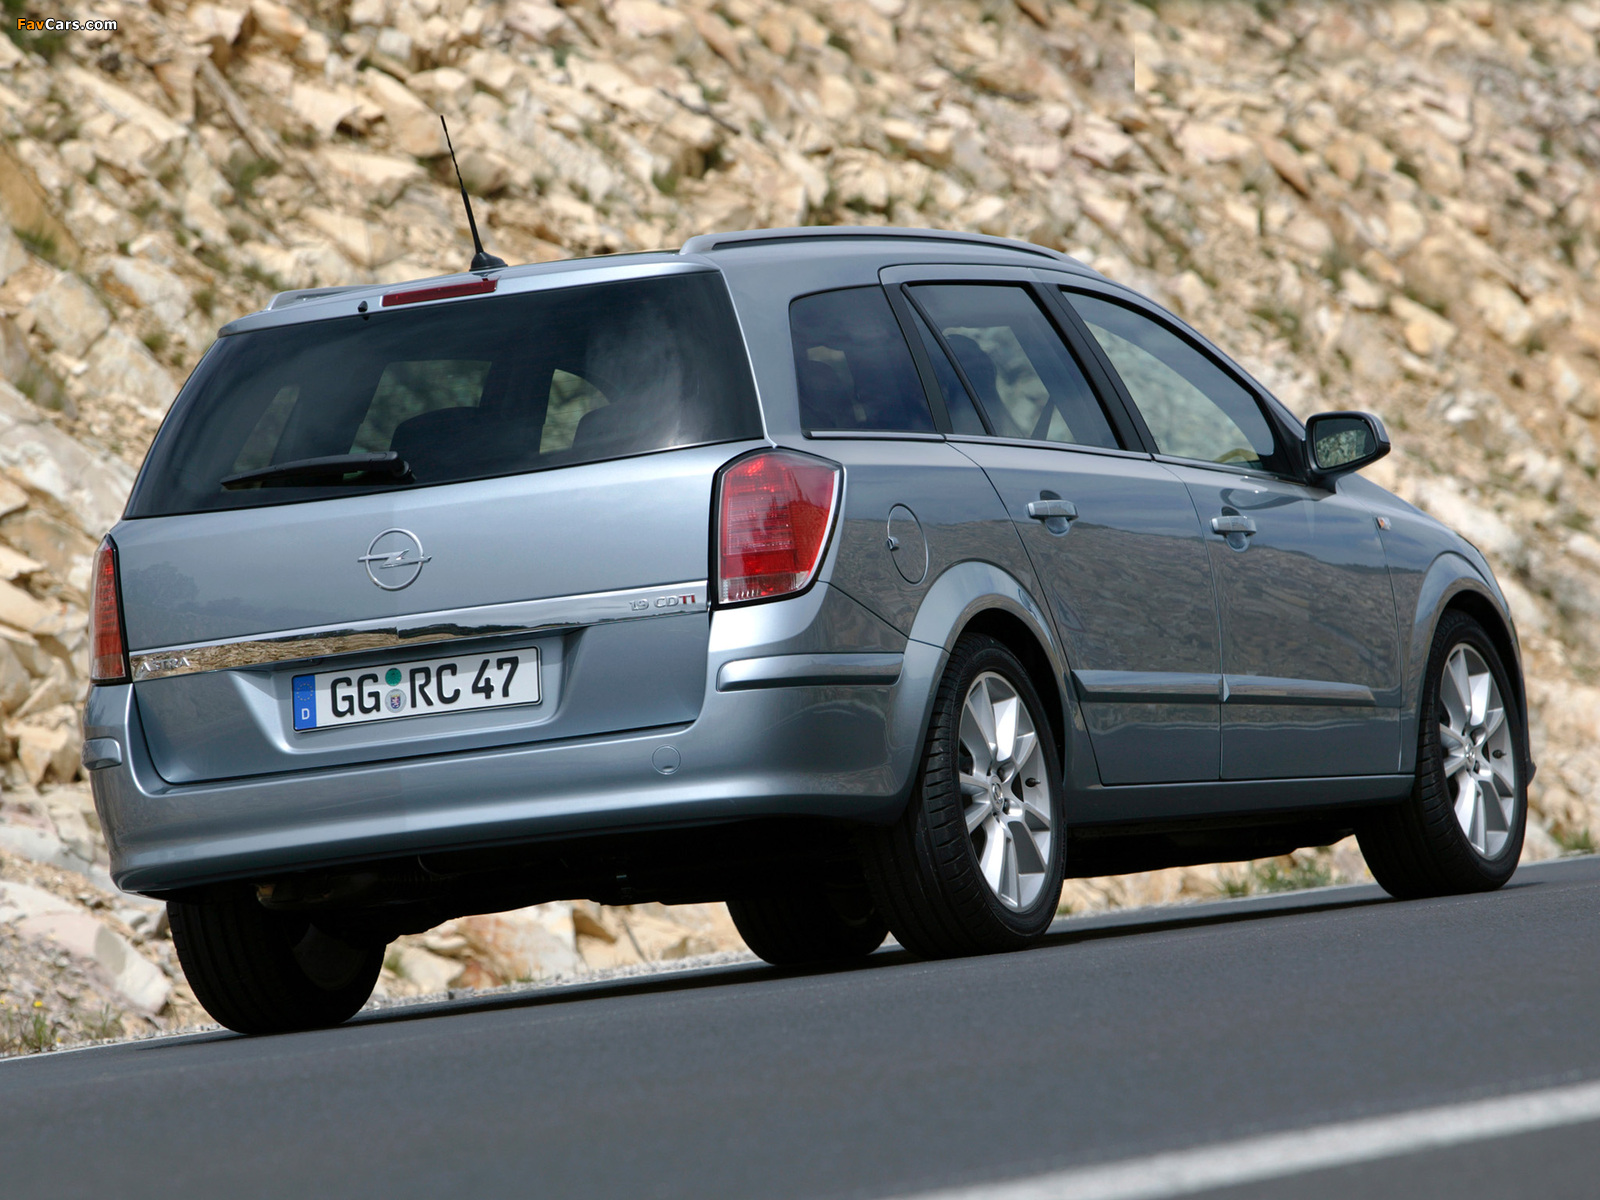 Opel family. Opel Astra Caravan 2007. Opel Astra Station Wagon. Opel Astra 2005 универсал.